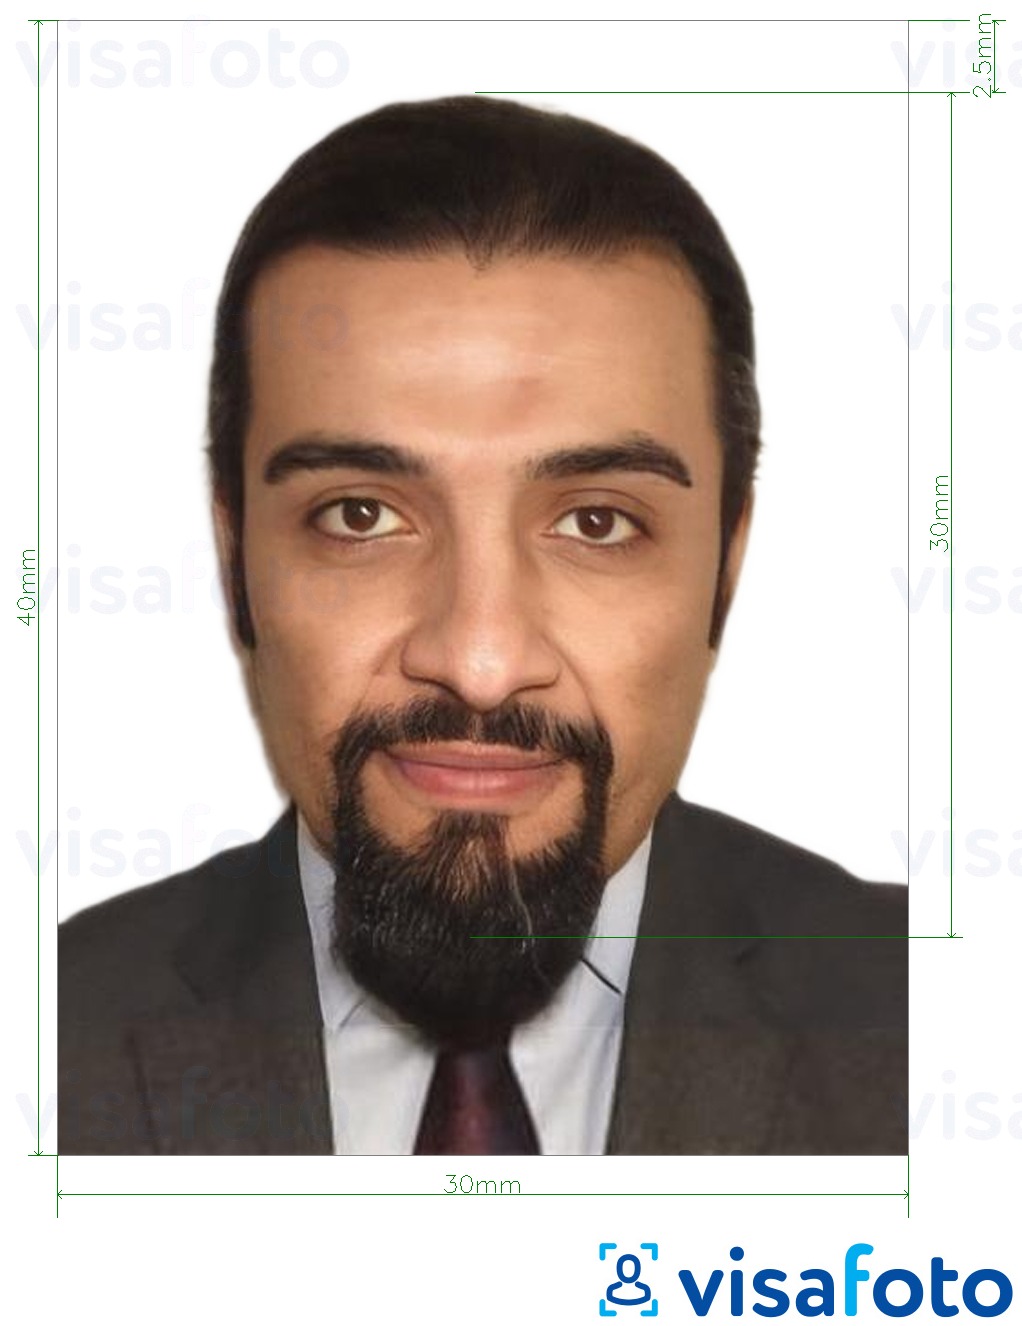 Qatar visa photo for Hayya Portal